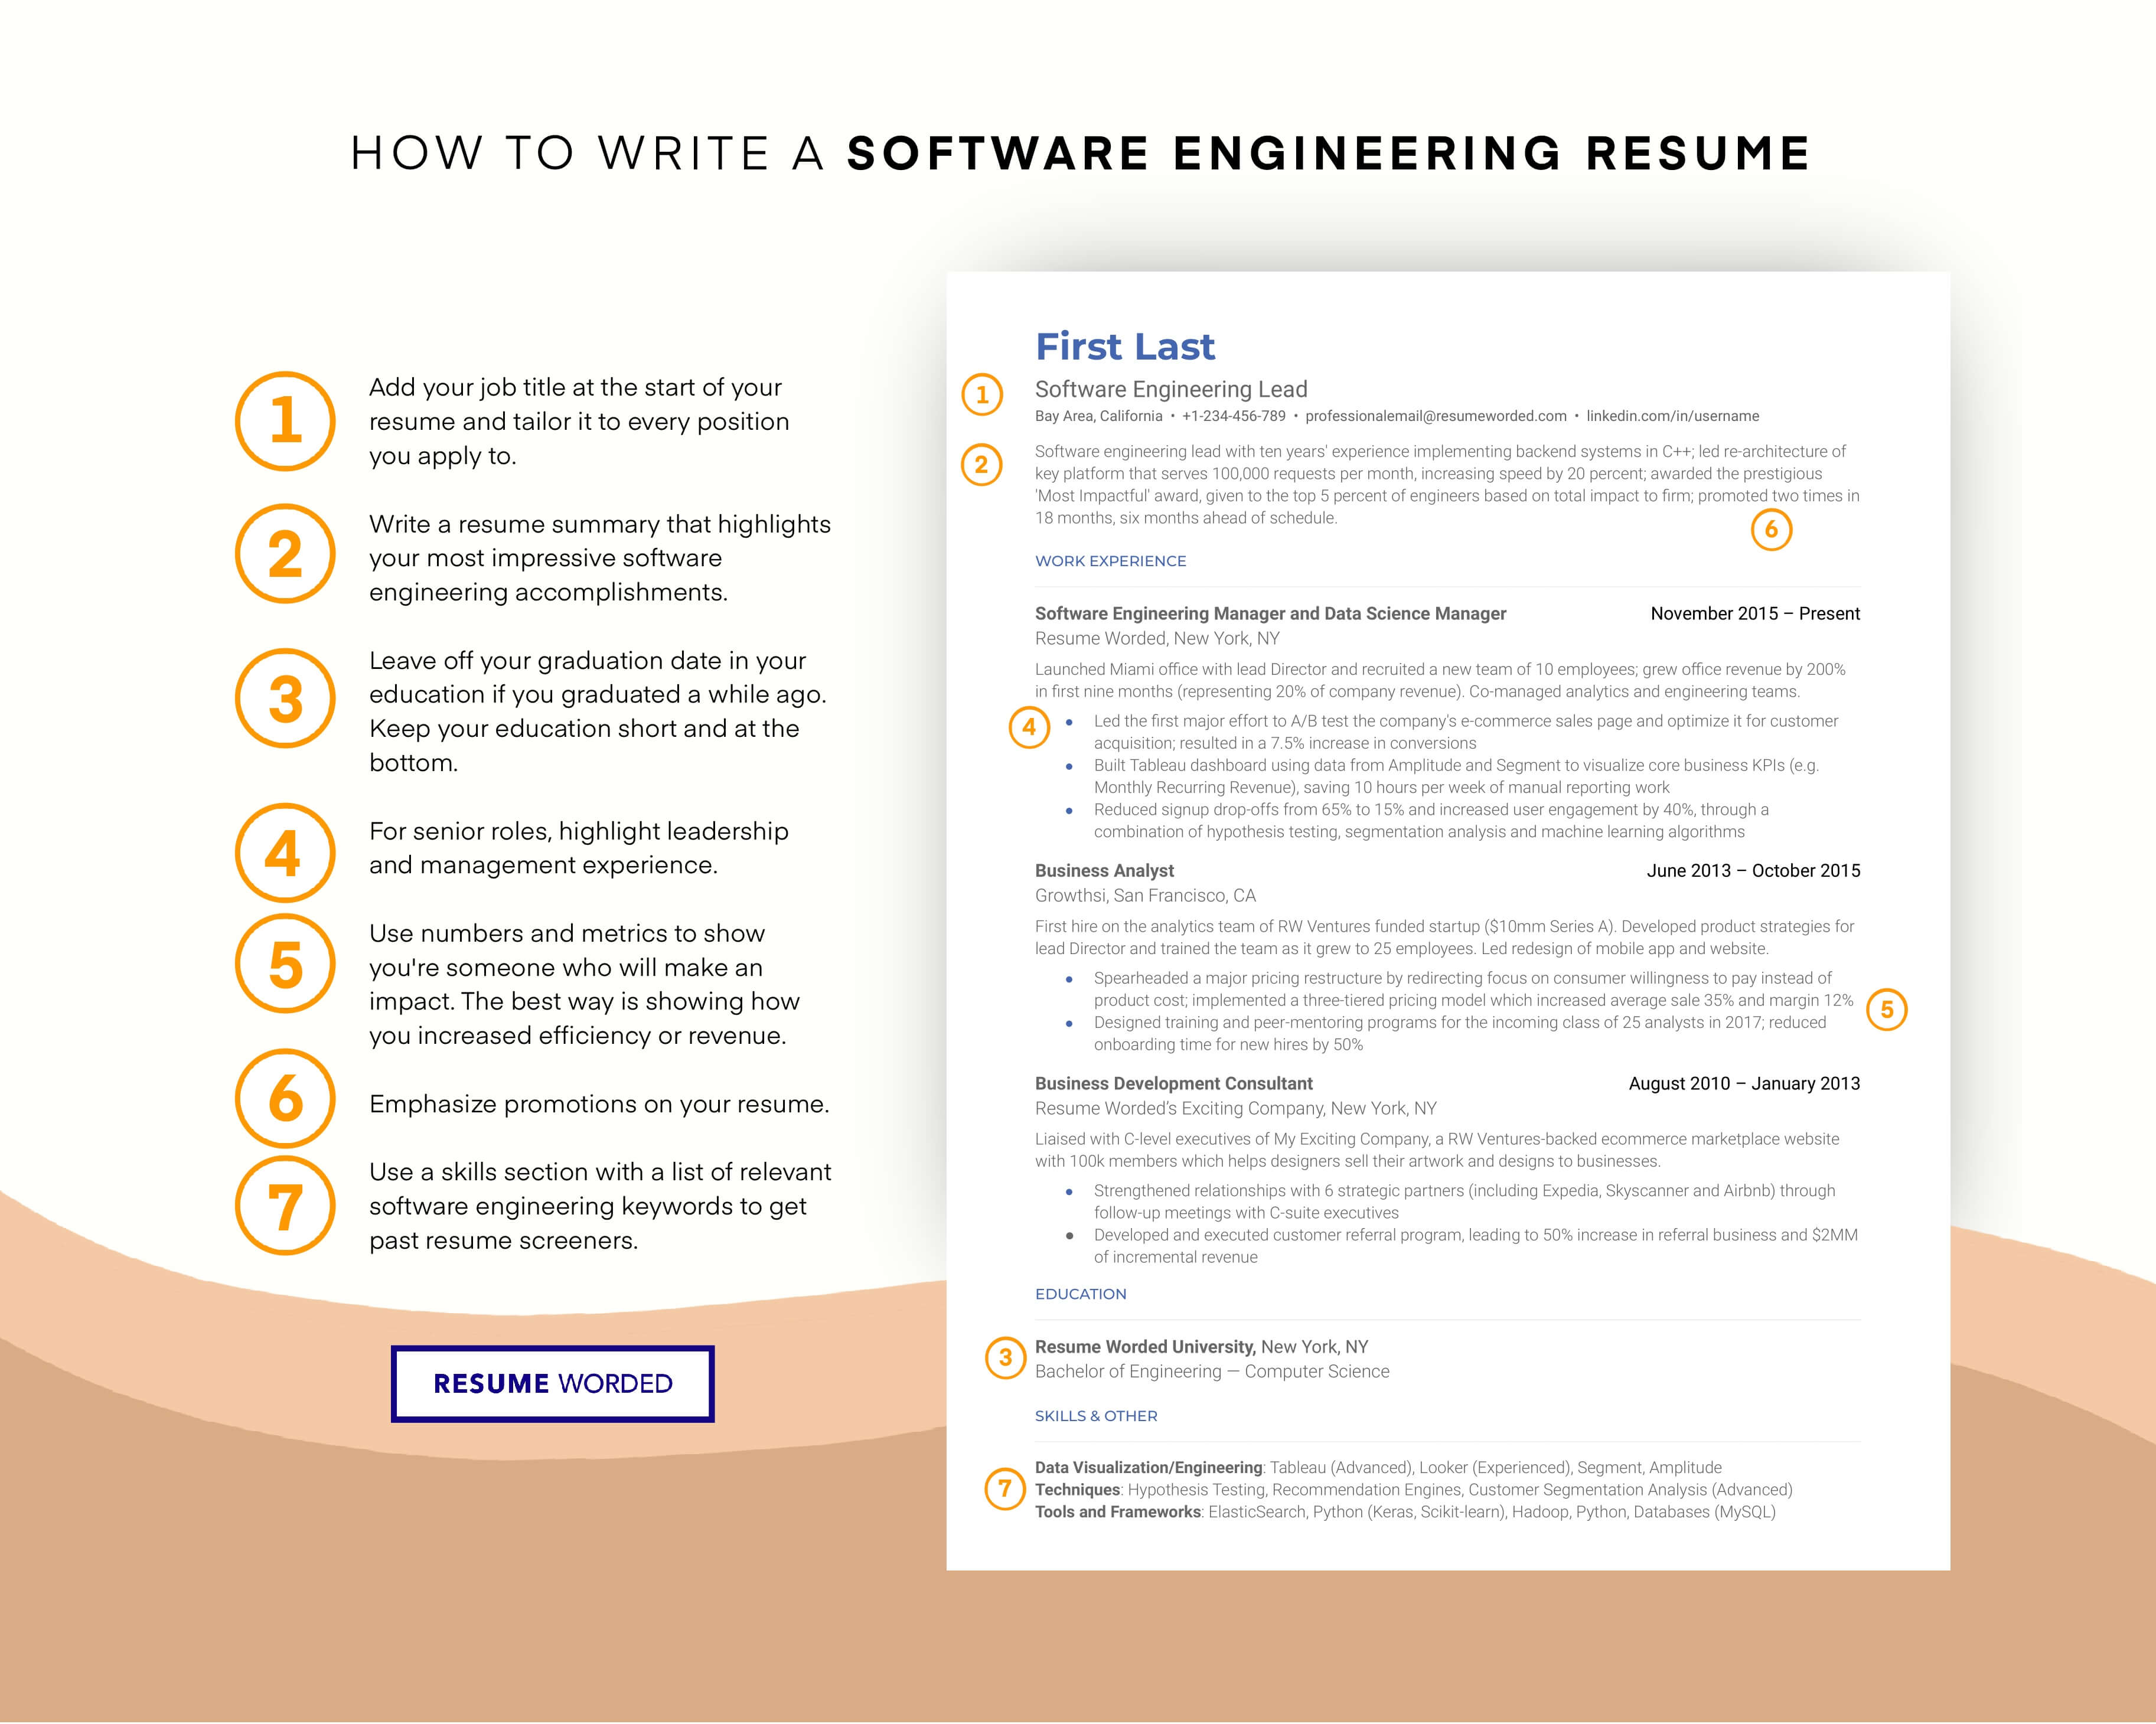 Demonstrate software proficiency - Interior Designer CV